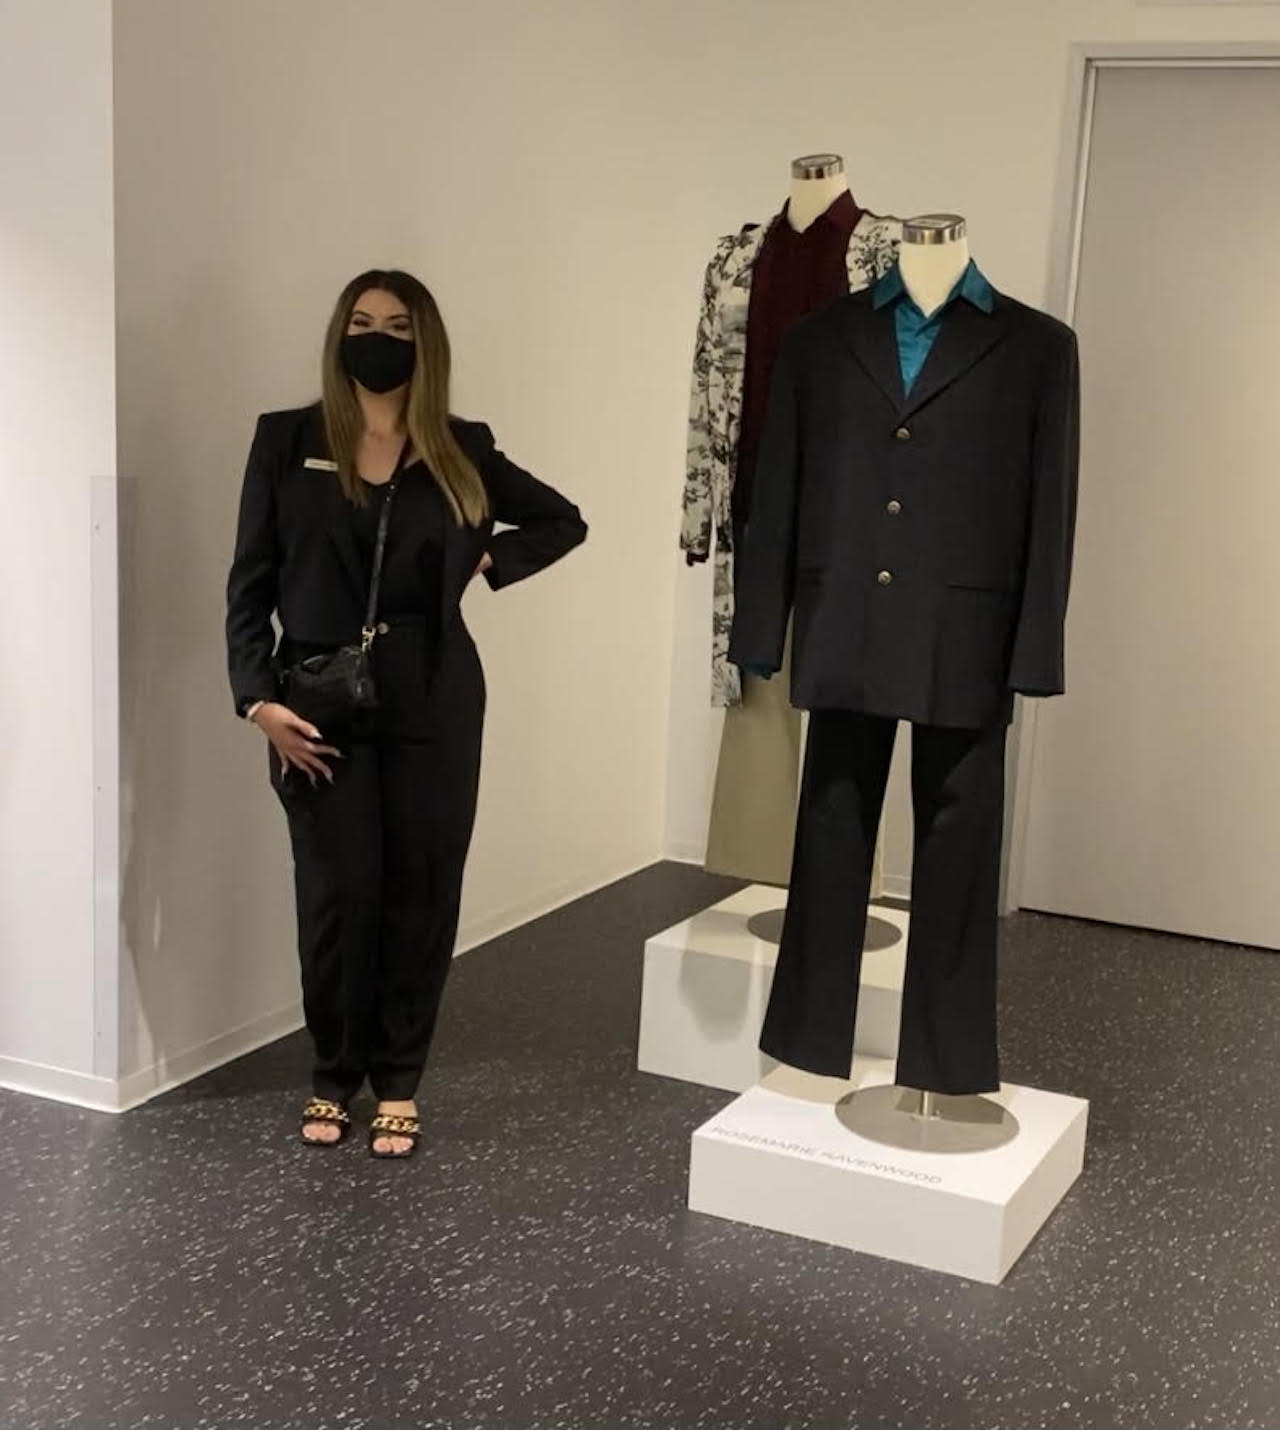 FIDM Graduate Rosemarie Ravenwood poses in a mask next to her menswear designs